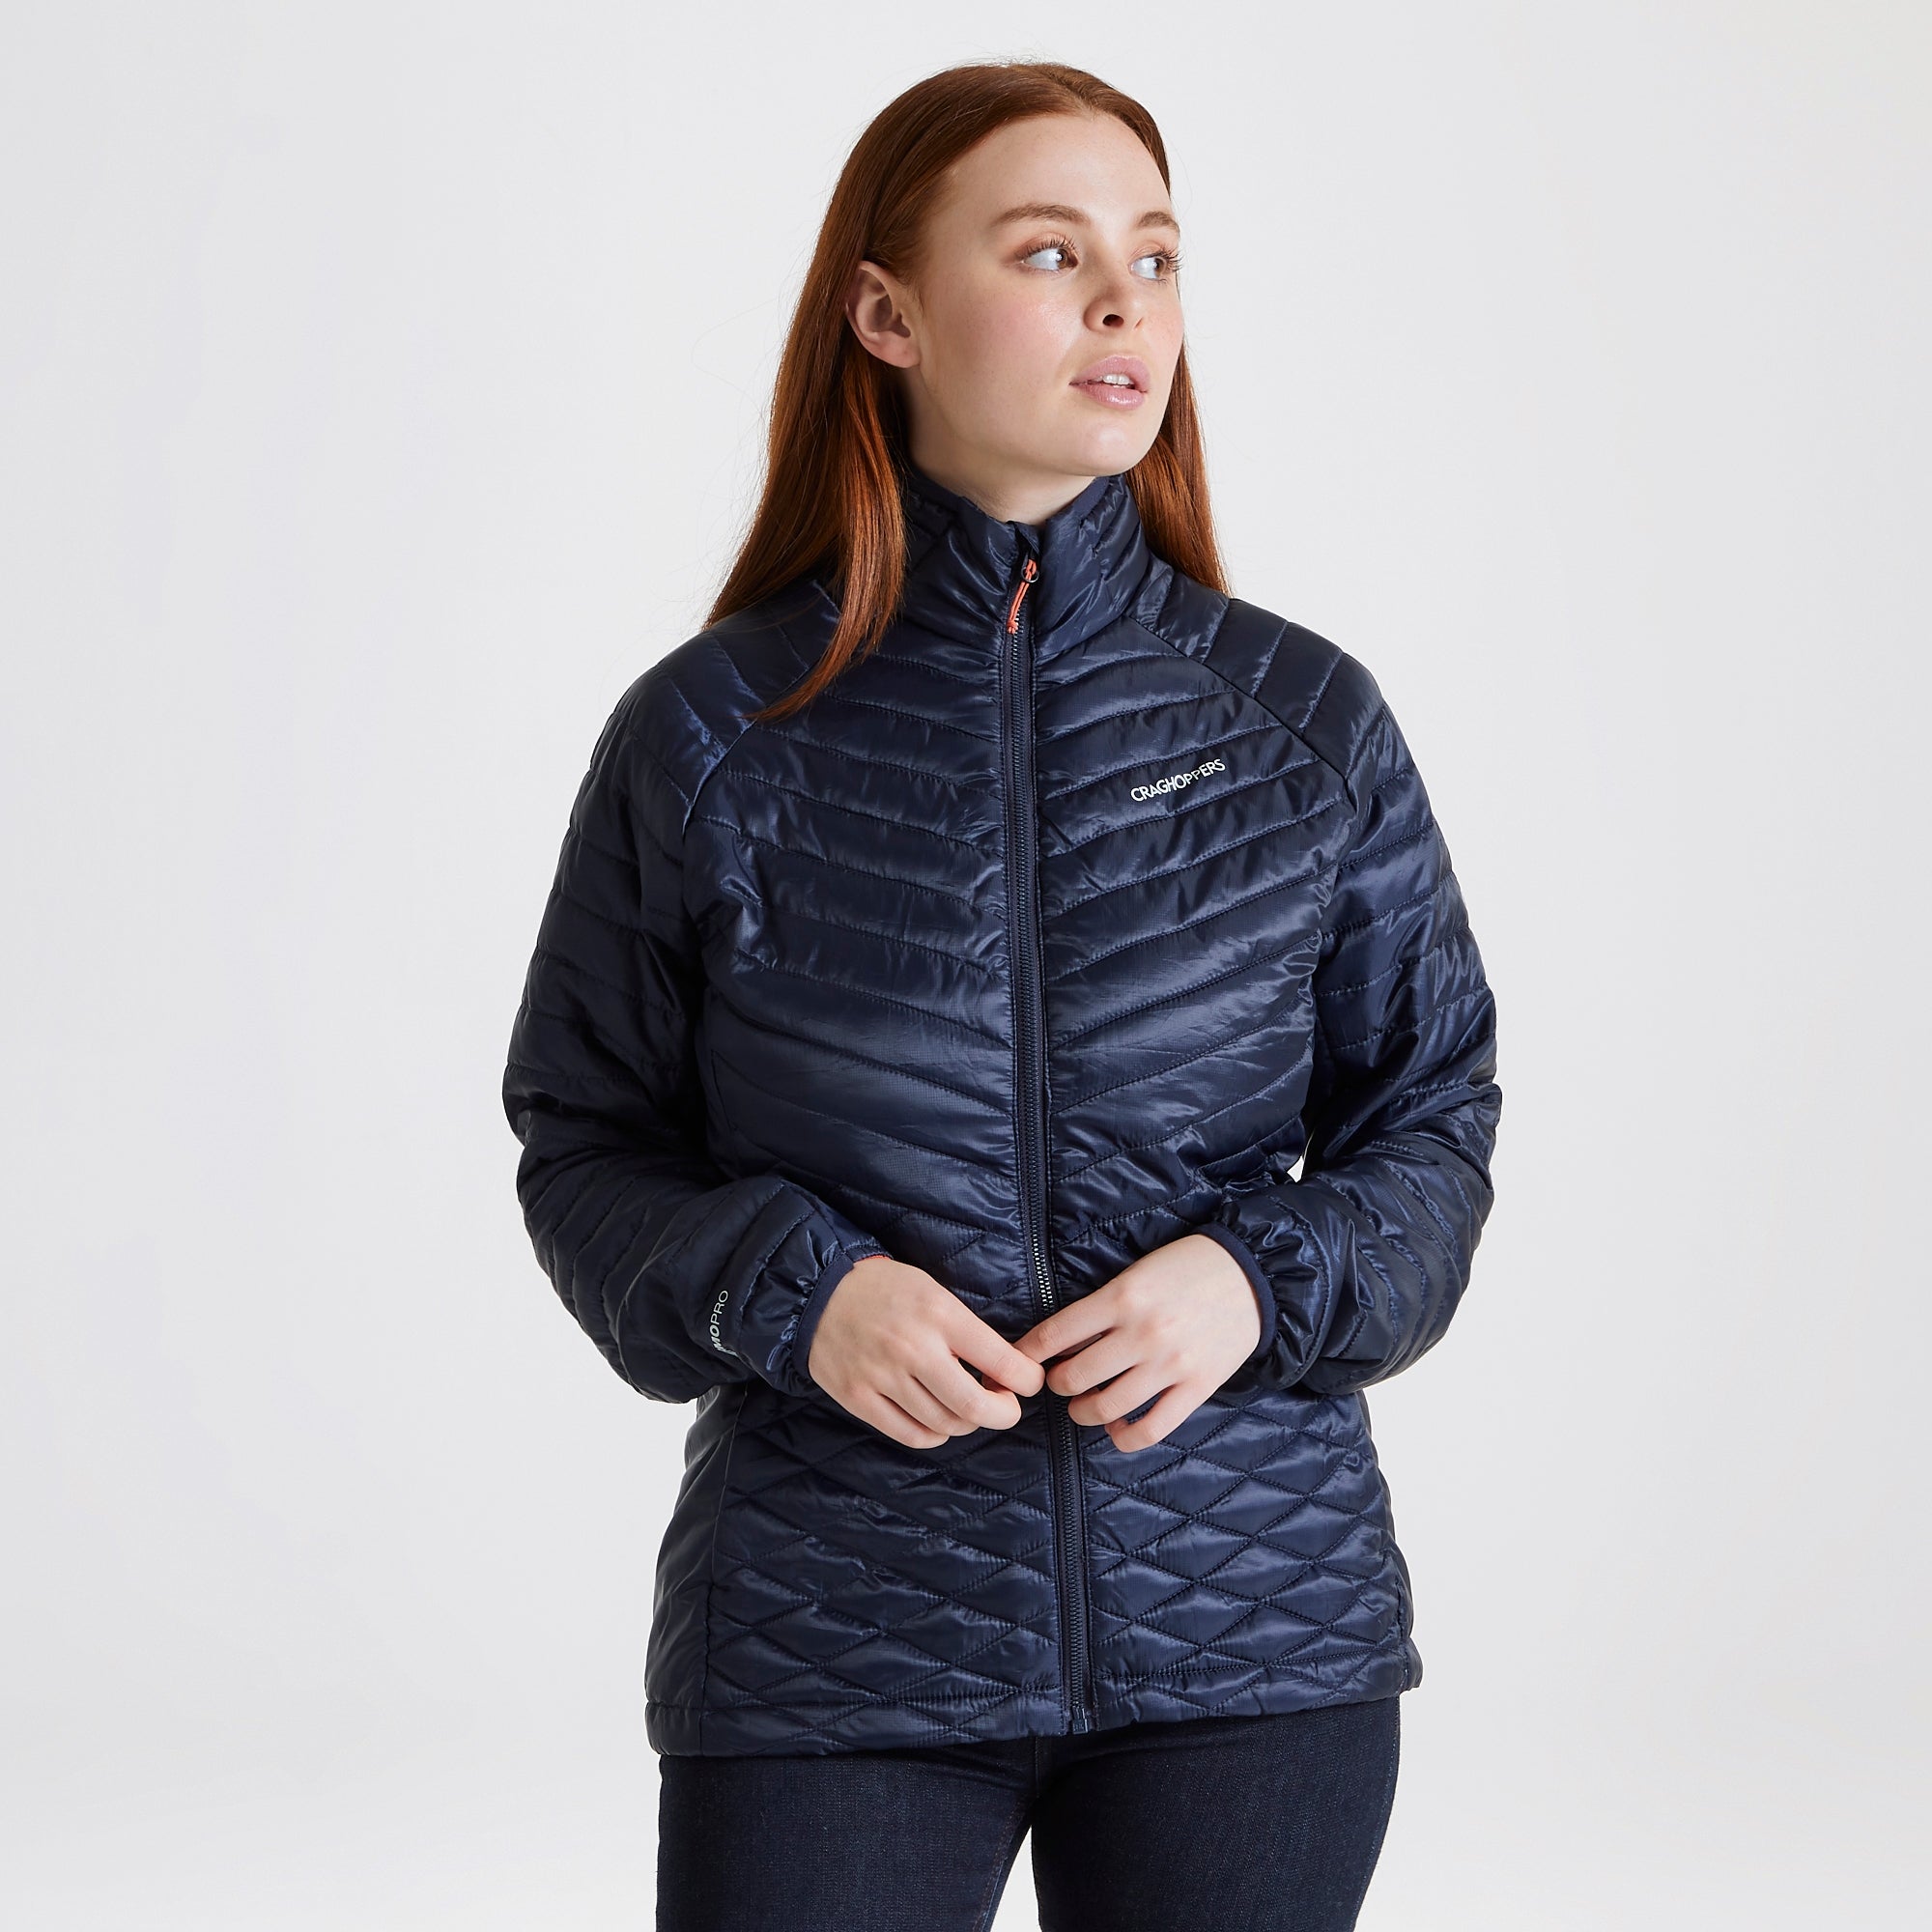 Women's ExpoLite Jacket | Blue Navy/Warm Ginger